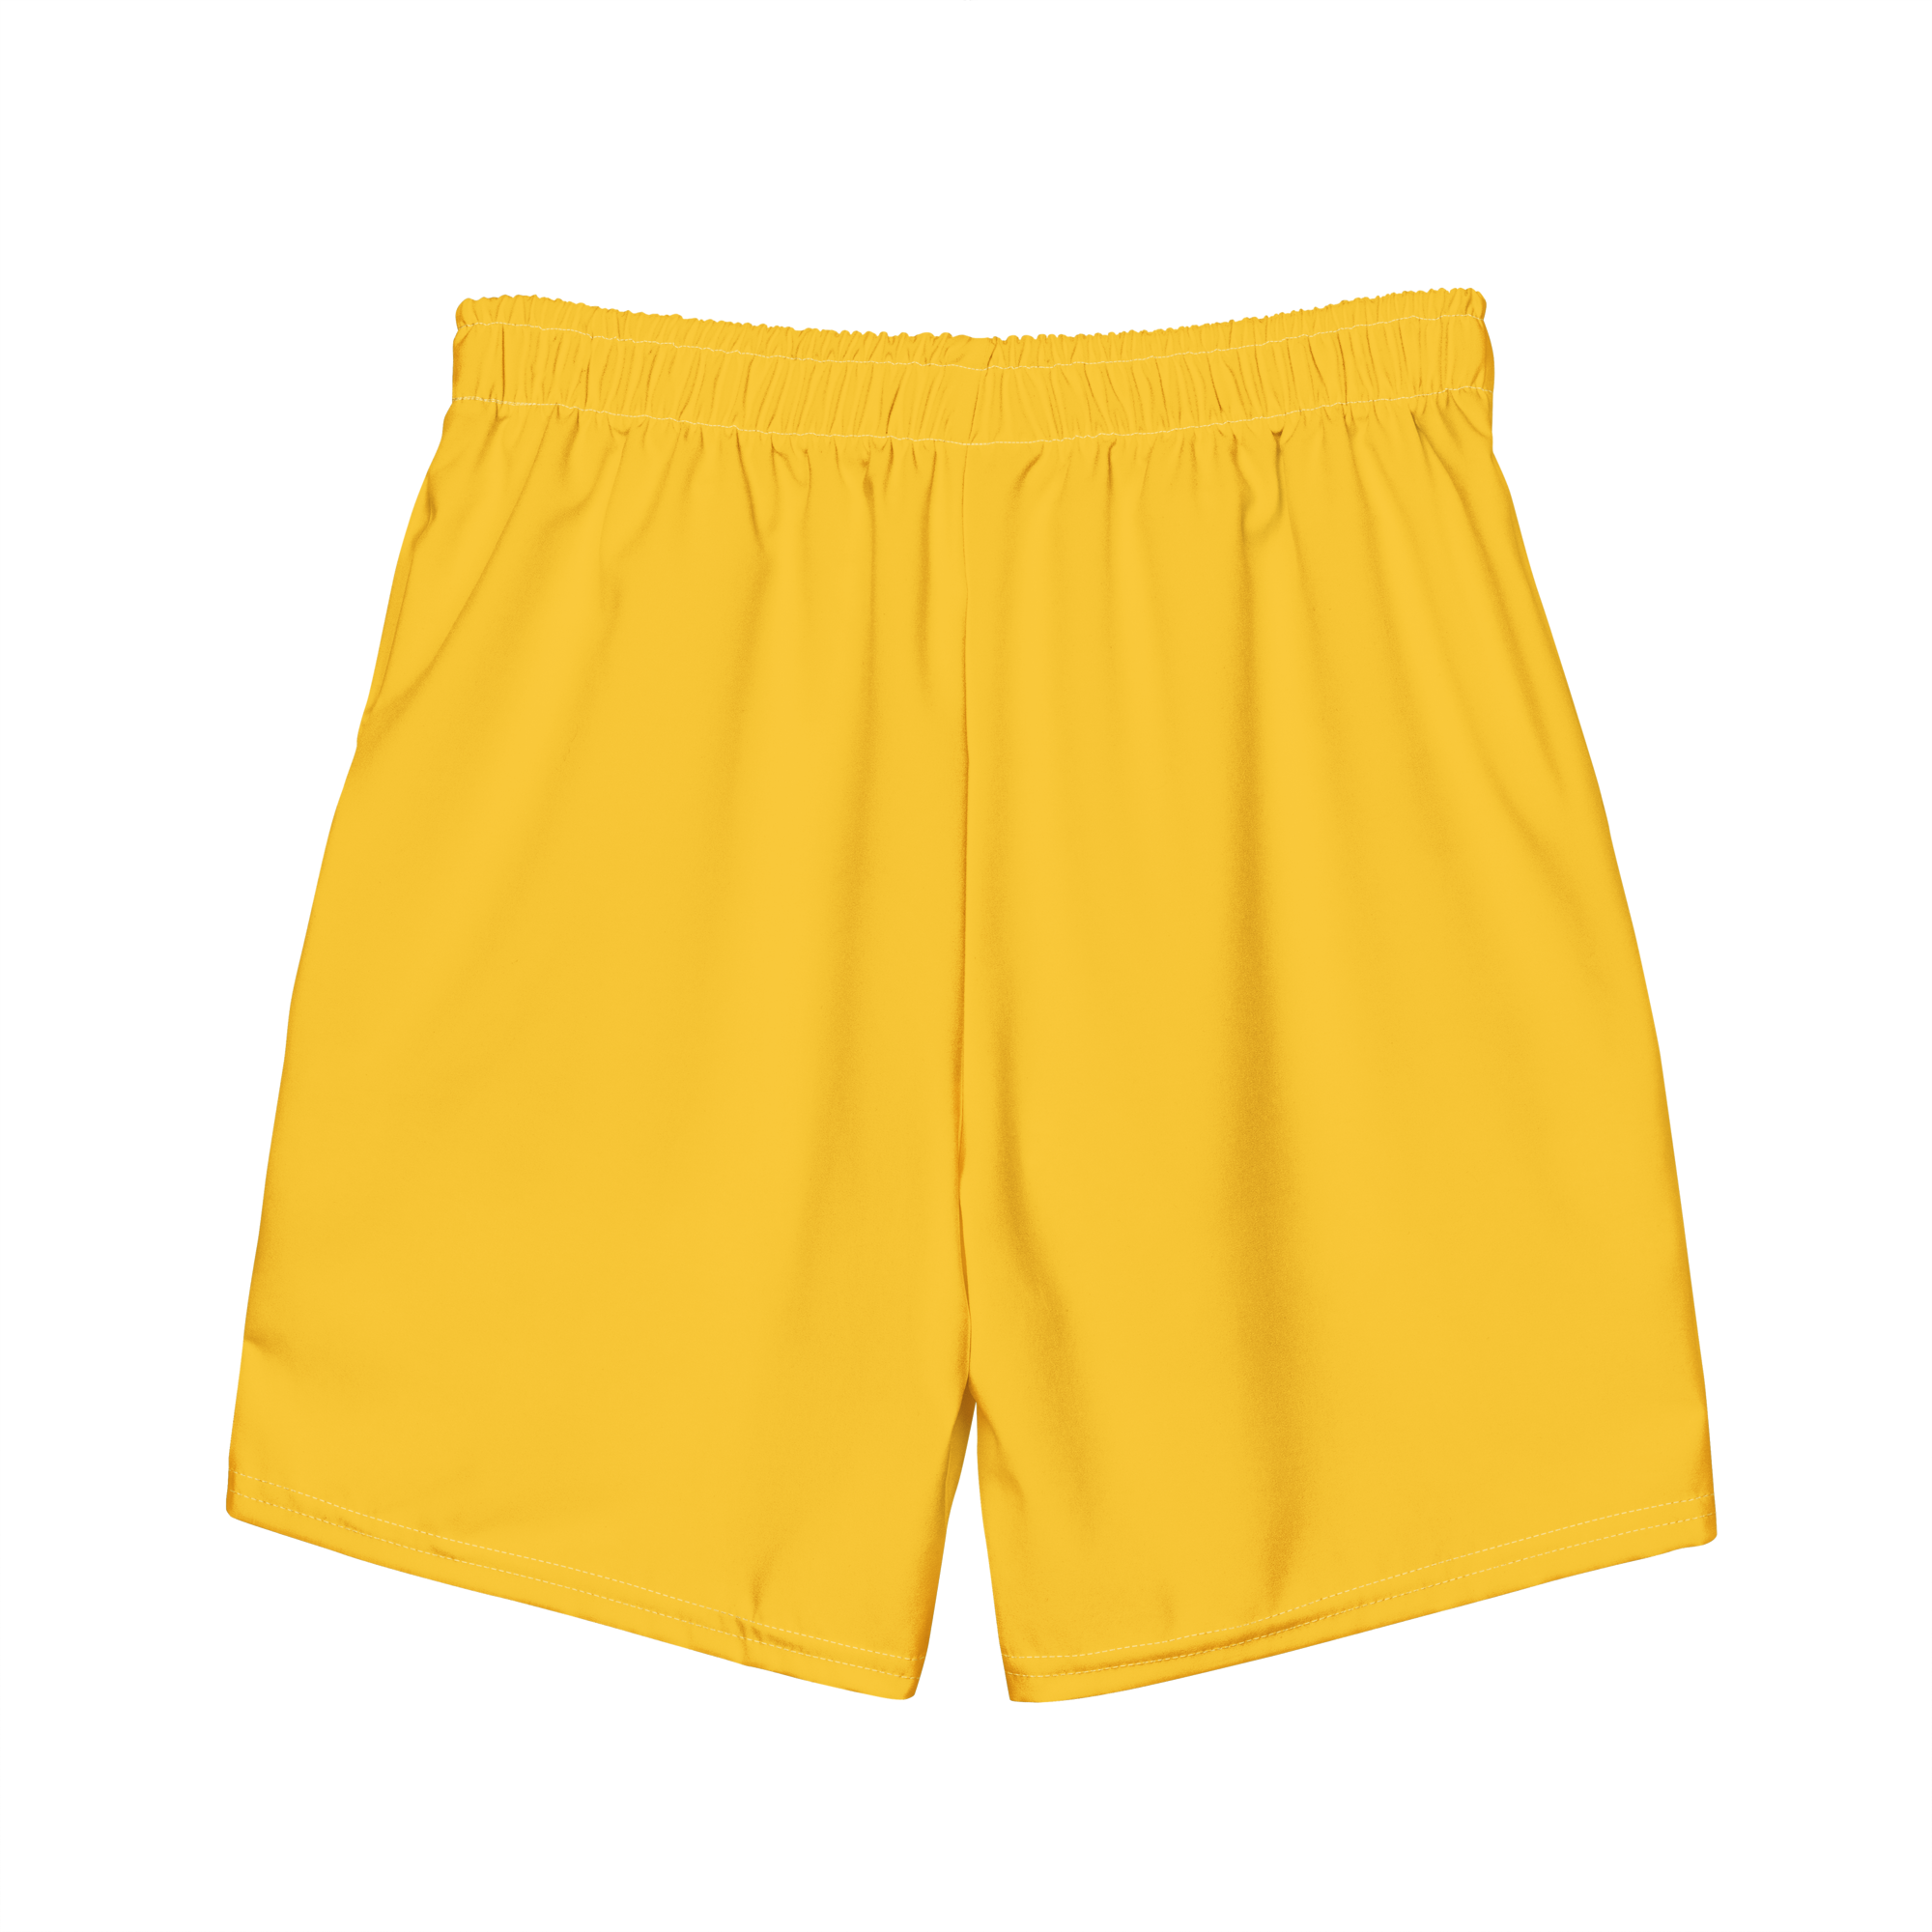 Jail House Board Shorts - Greg Noll Style Vintage Swim Trunks | Evoke Apparel - yellow - back